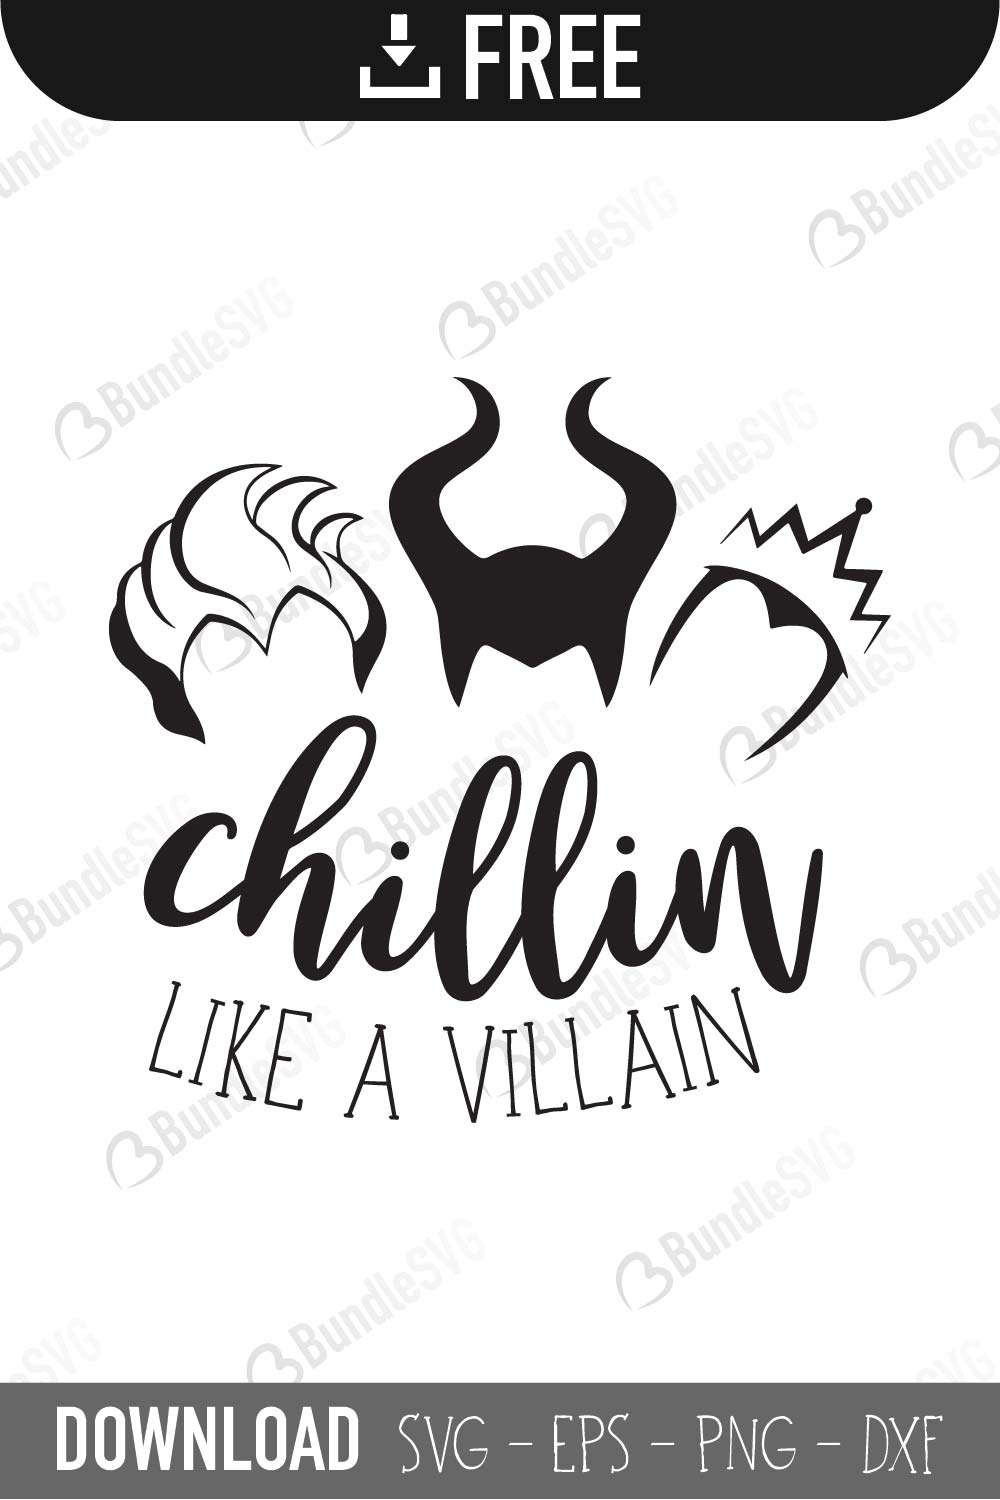 Download Chillin Like a Villain SVG Cut Files Free Download | BundleSVG